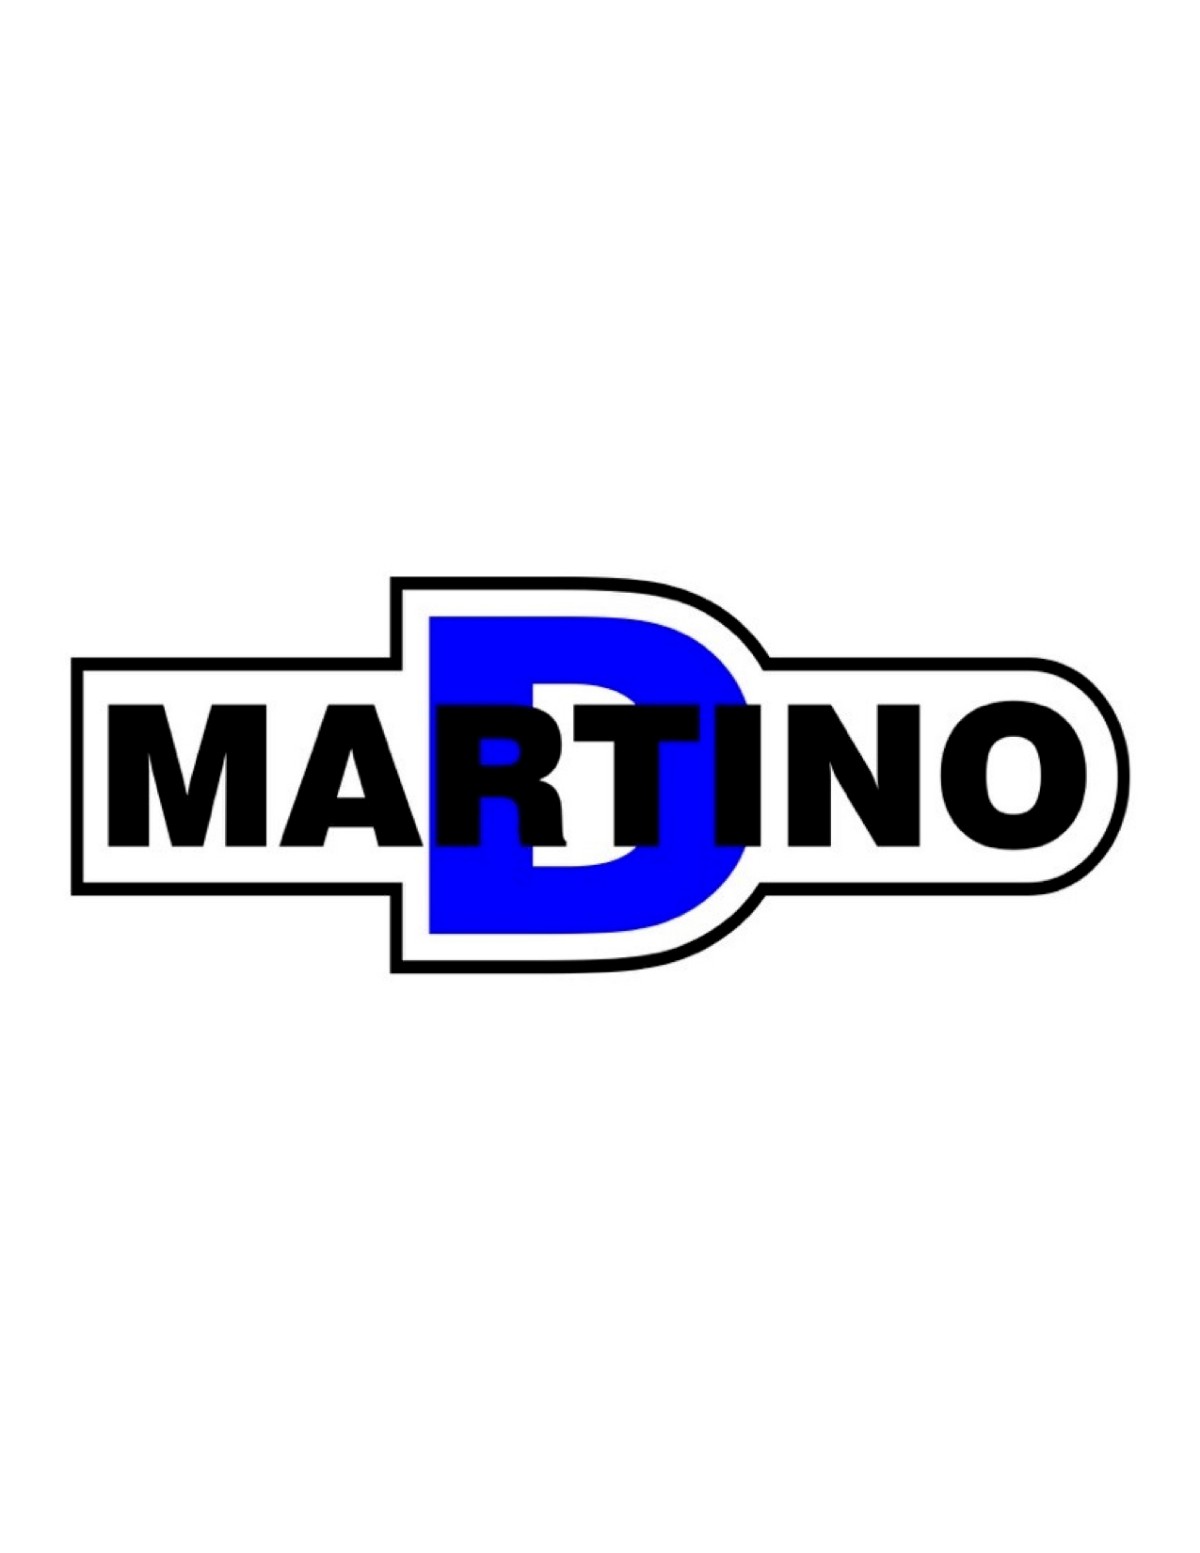 D. Martino Construction